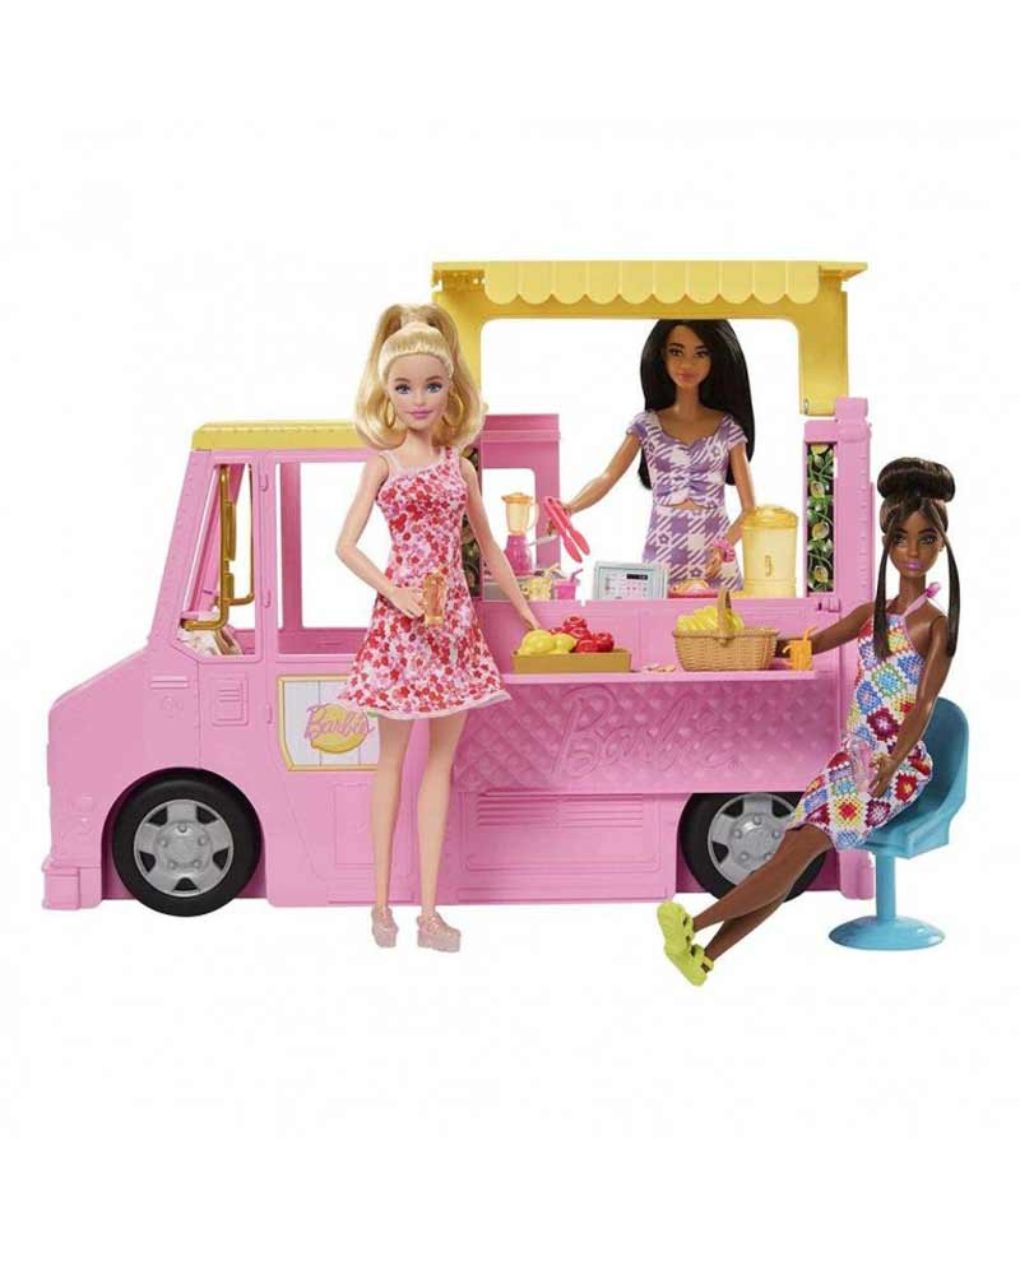 Barbie καντίνα για χυμούς hpl71 - BARBIE